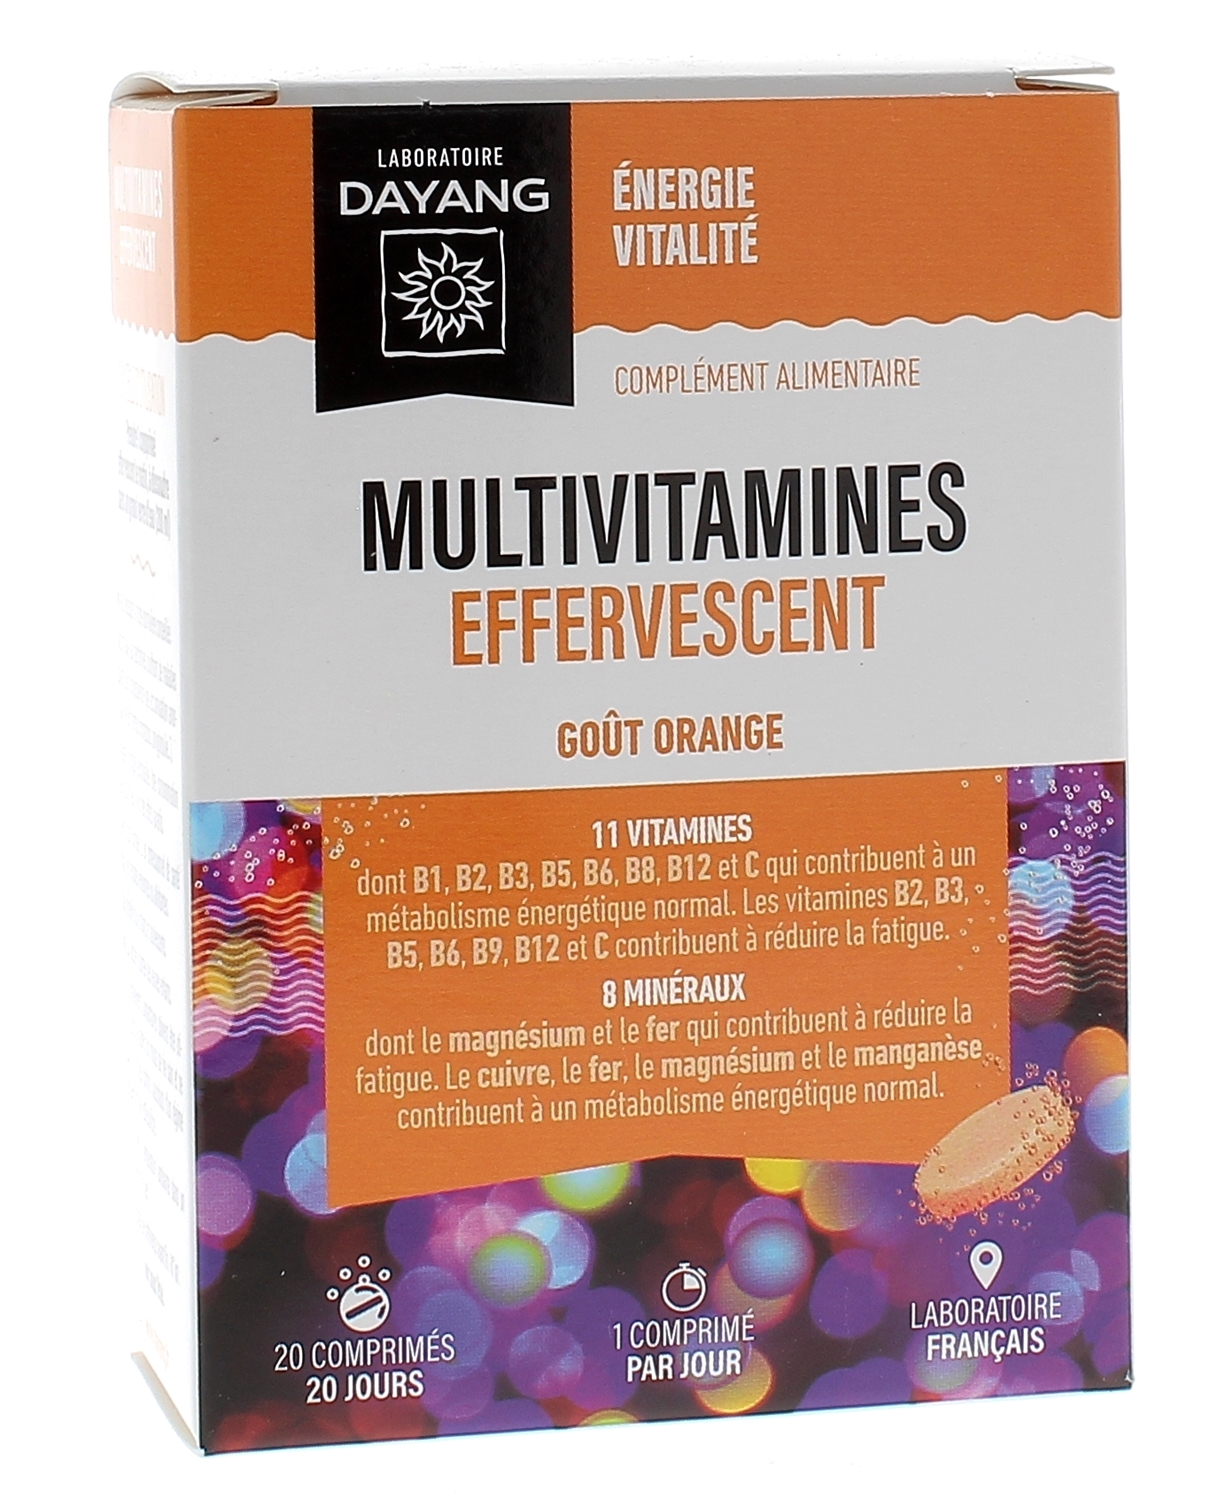 Multivitamines effervescent goût orange Dayang - boite de 20 comprimés effervescents